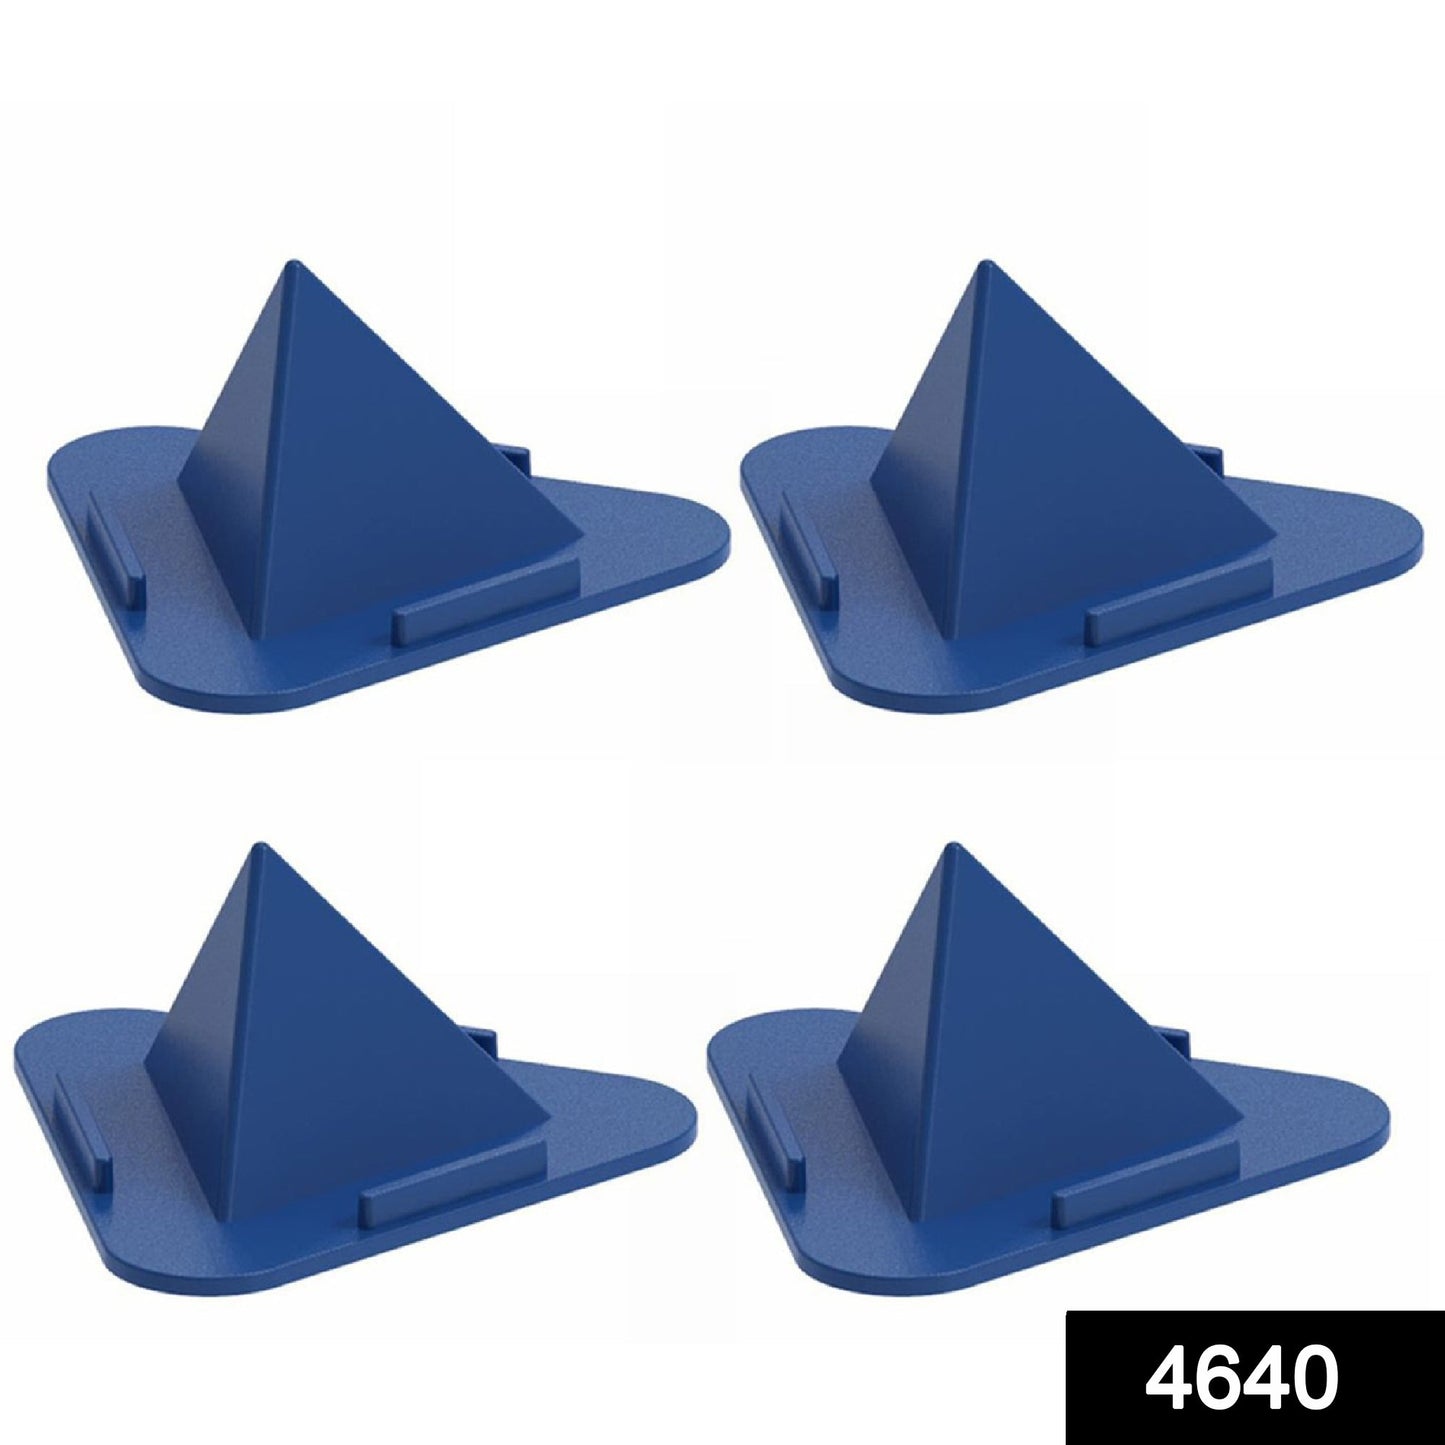 4640 Universal Portable Three-Sided Pyramid Shape Mobile Holder Stand DeoDap